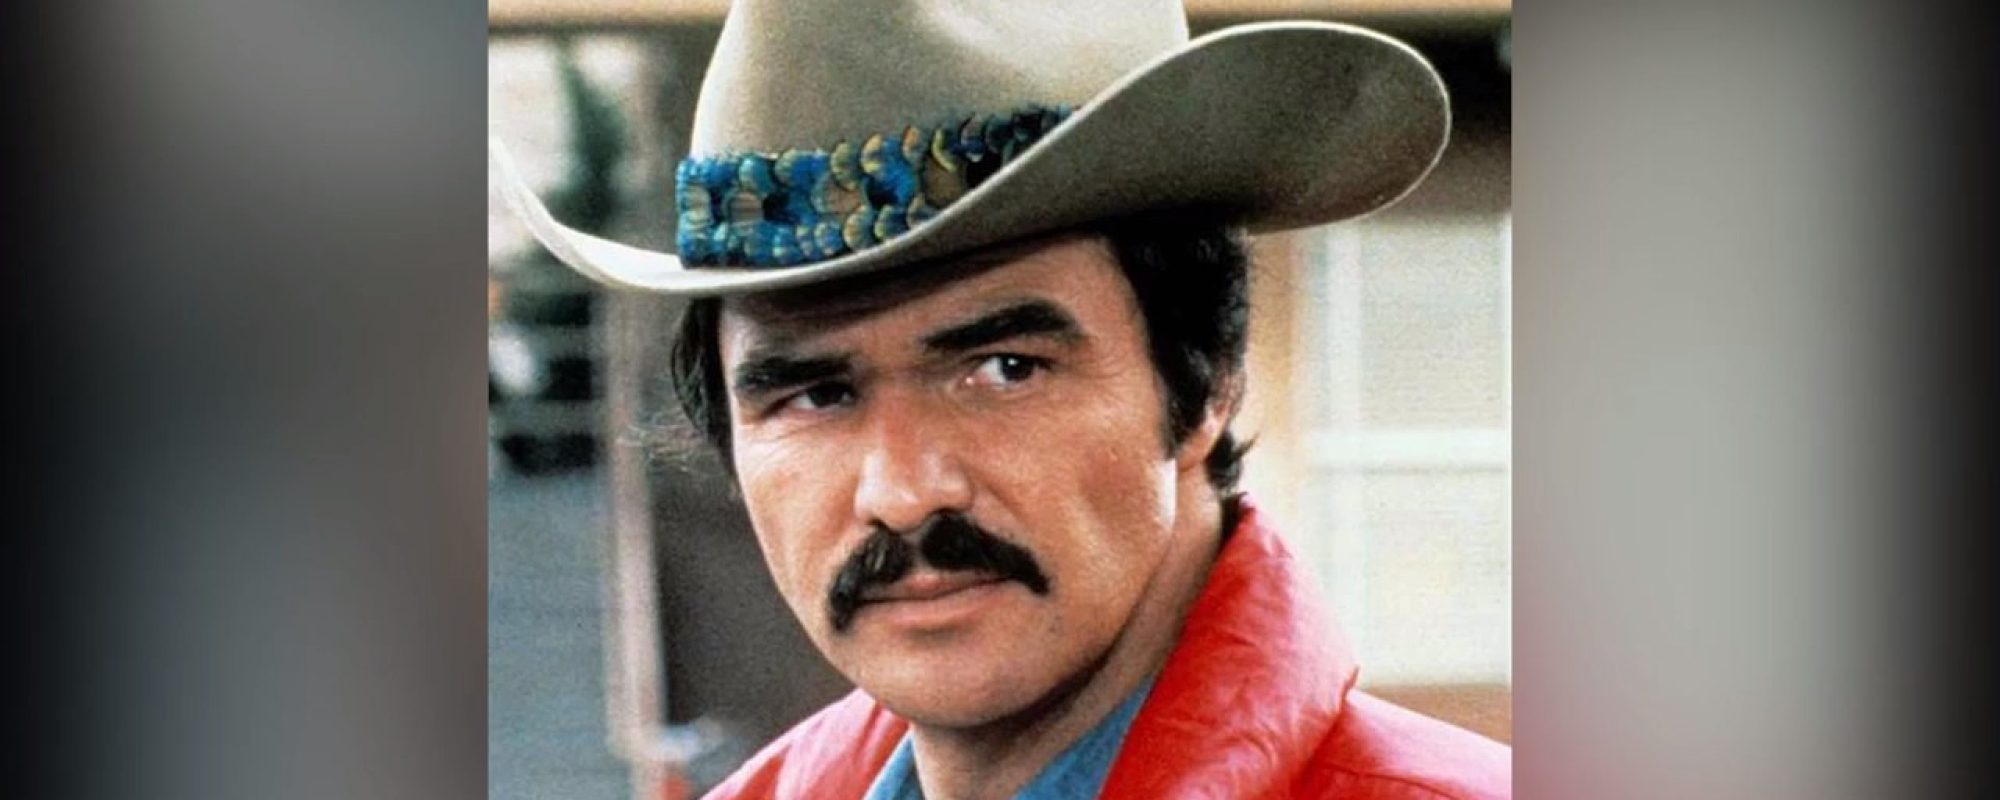 Burt Reynolds, Hollywood’s Bad Boy, Passes at 82